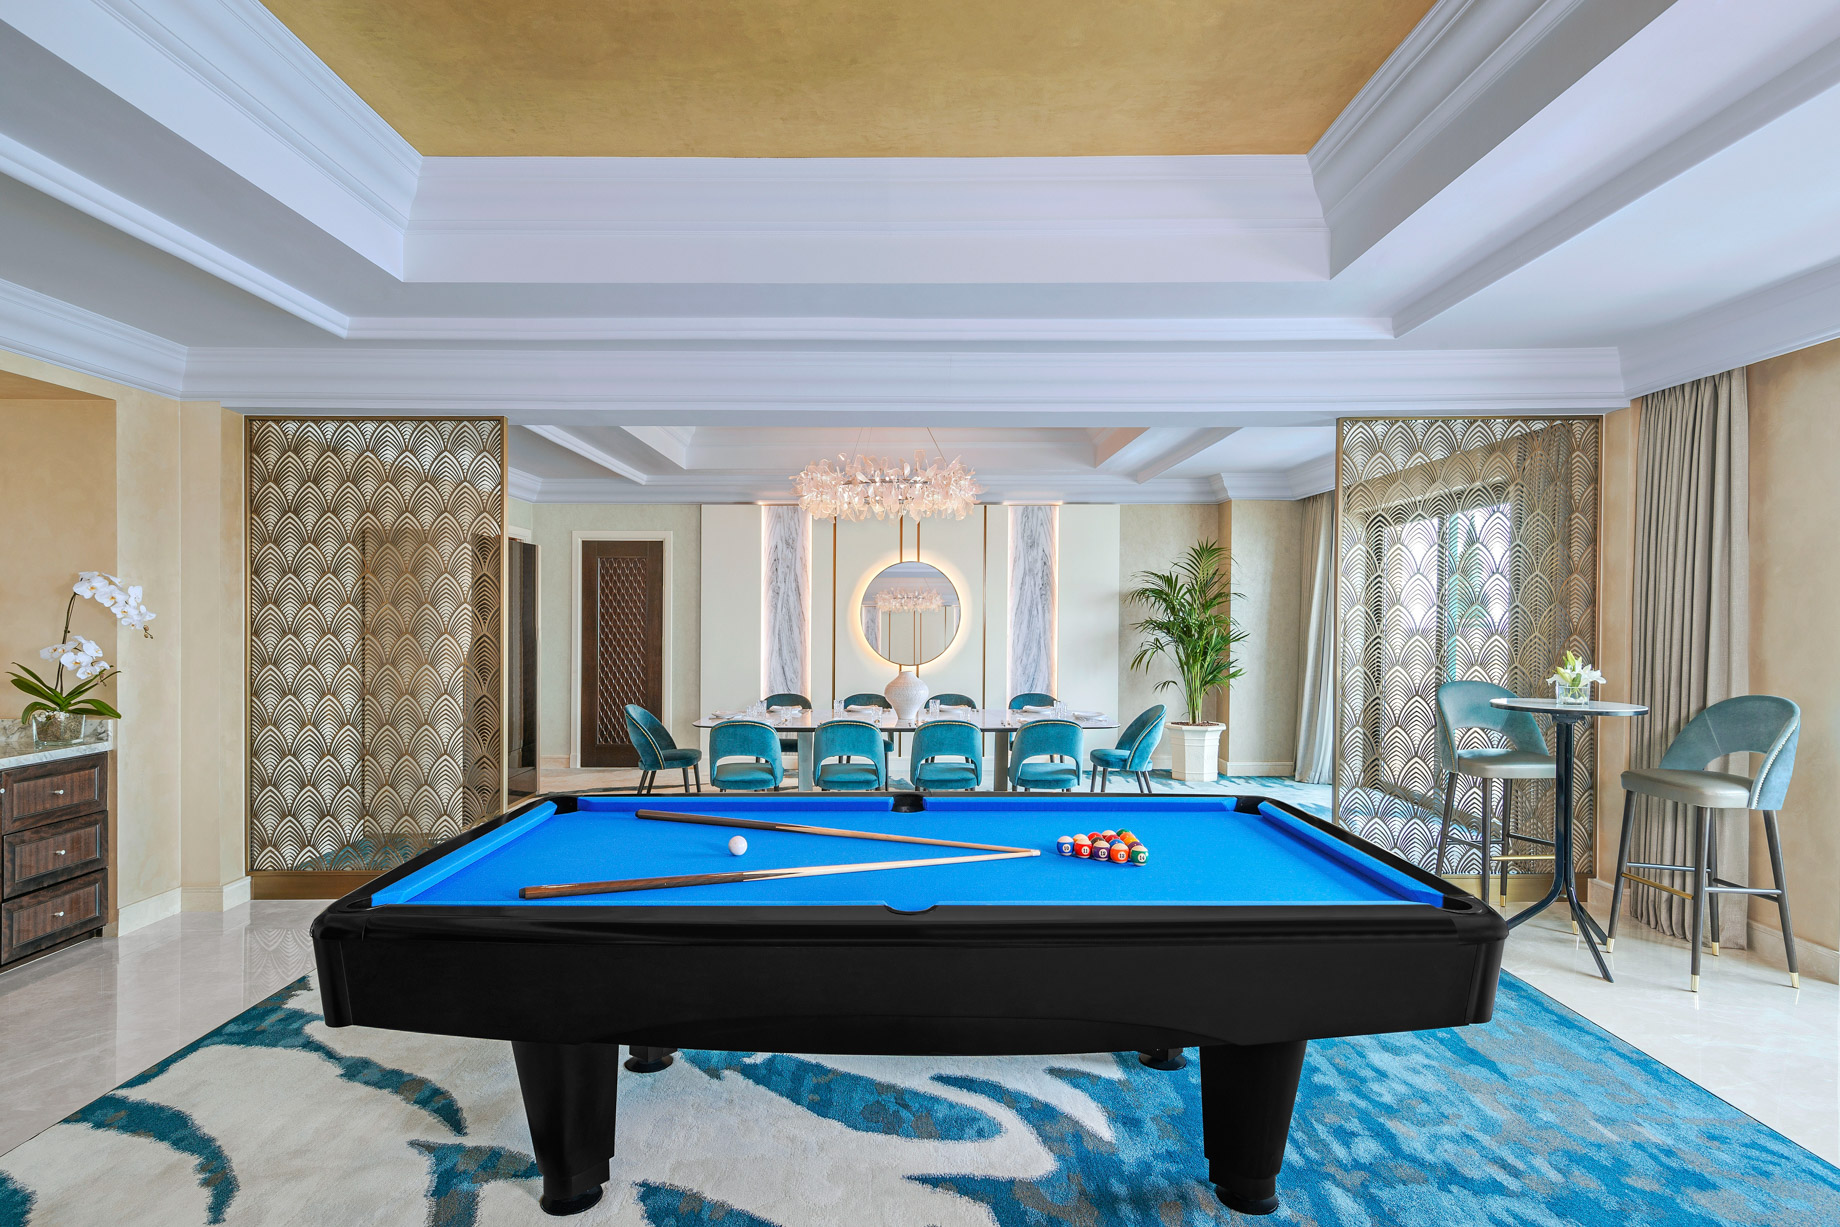 Atlantis The Palm Resort – Crescent Rd, Dubai, UAE – Presidential Suite Pool Table